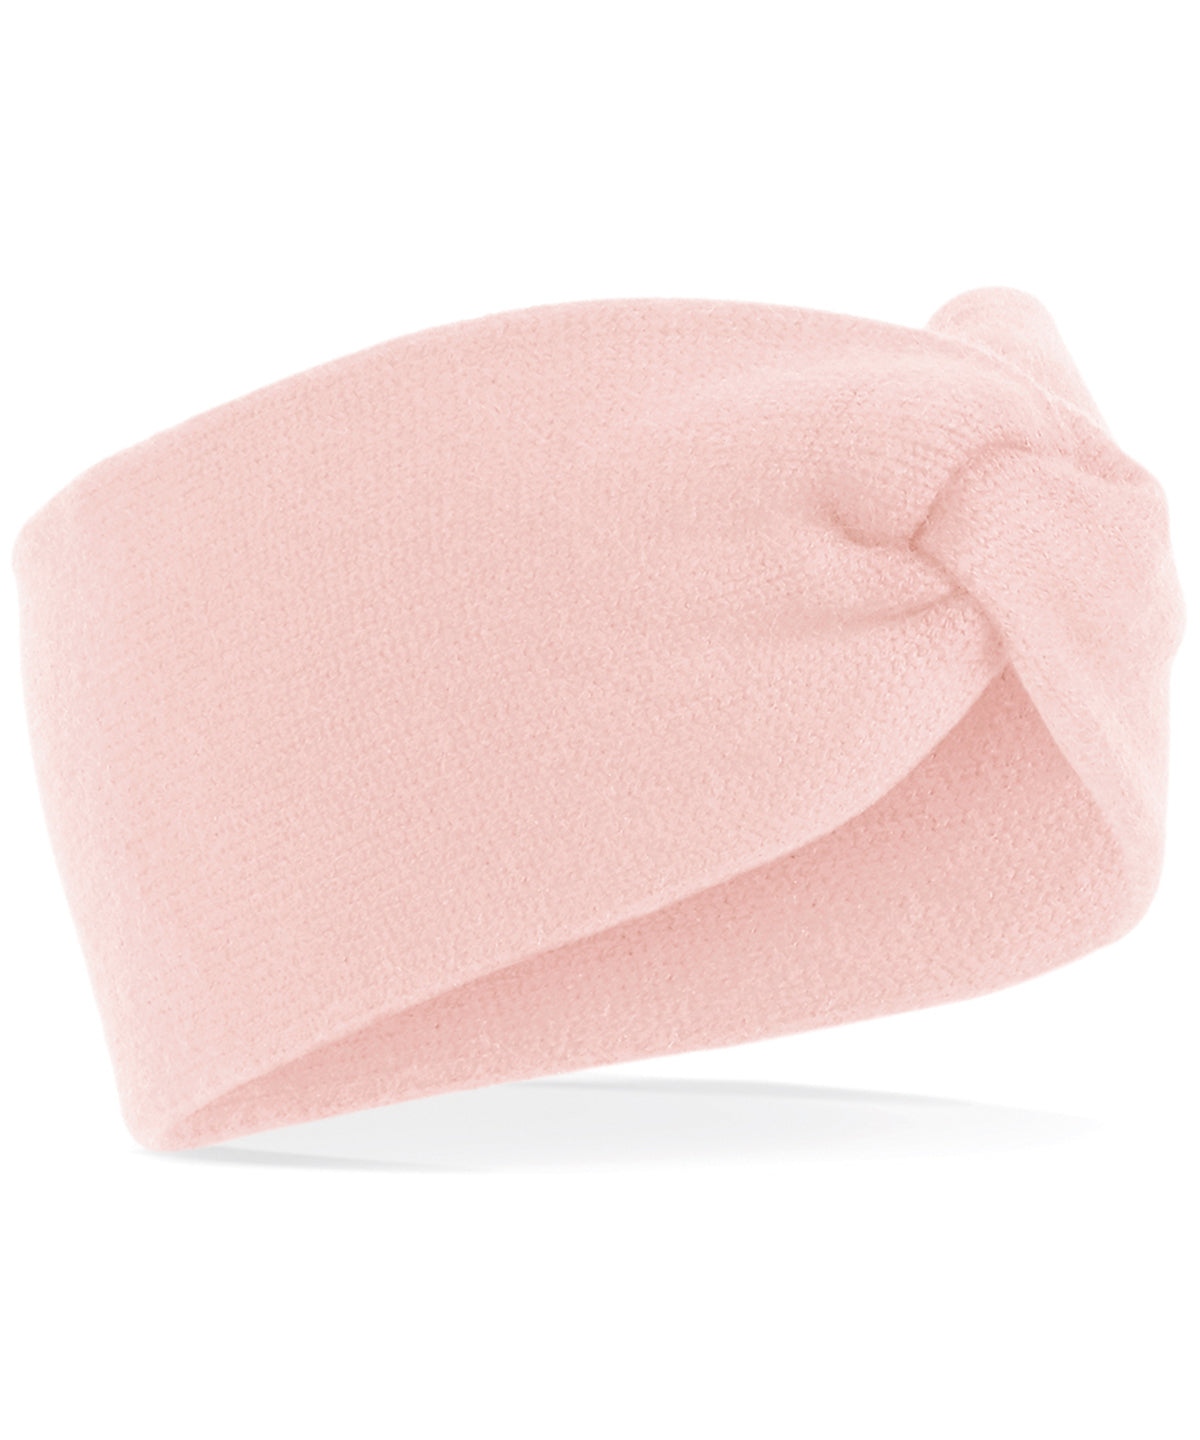 Personalised Headbands - Light Pink Beechfield Twist knit headband